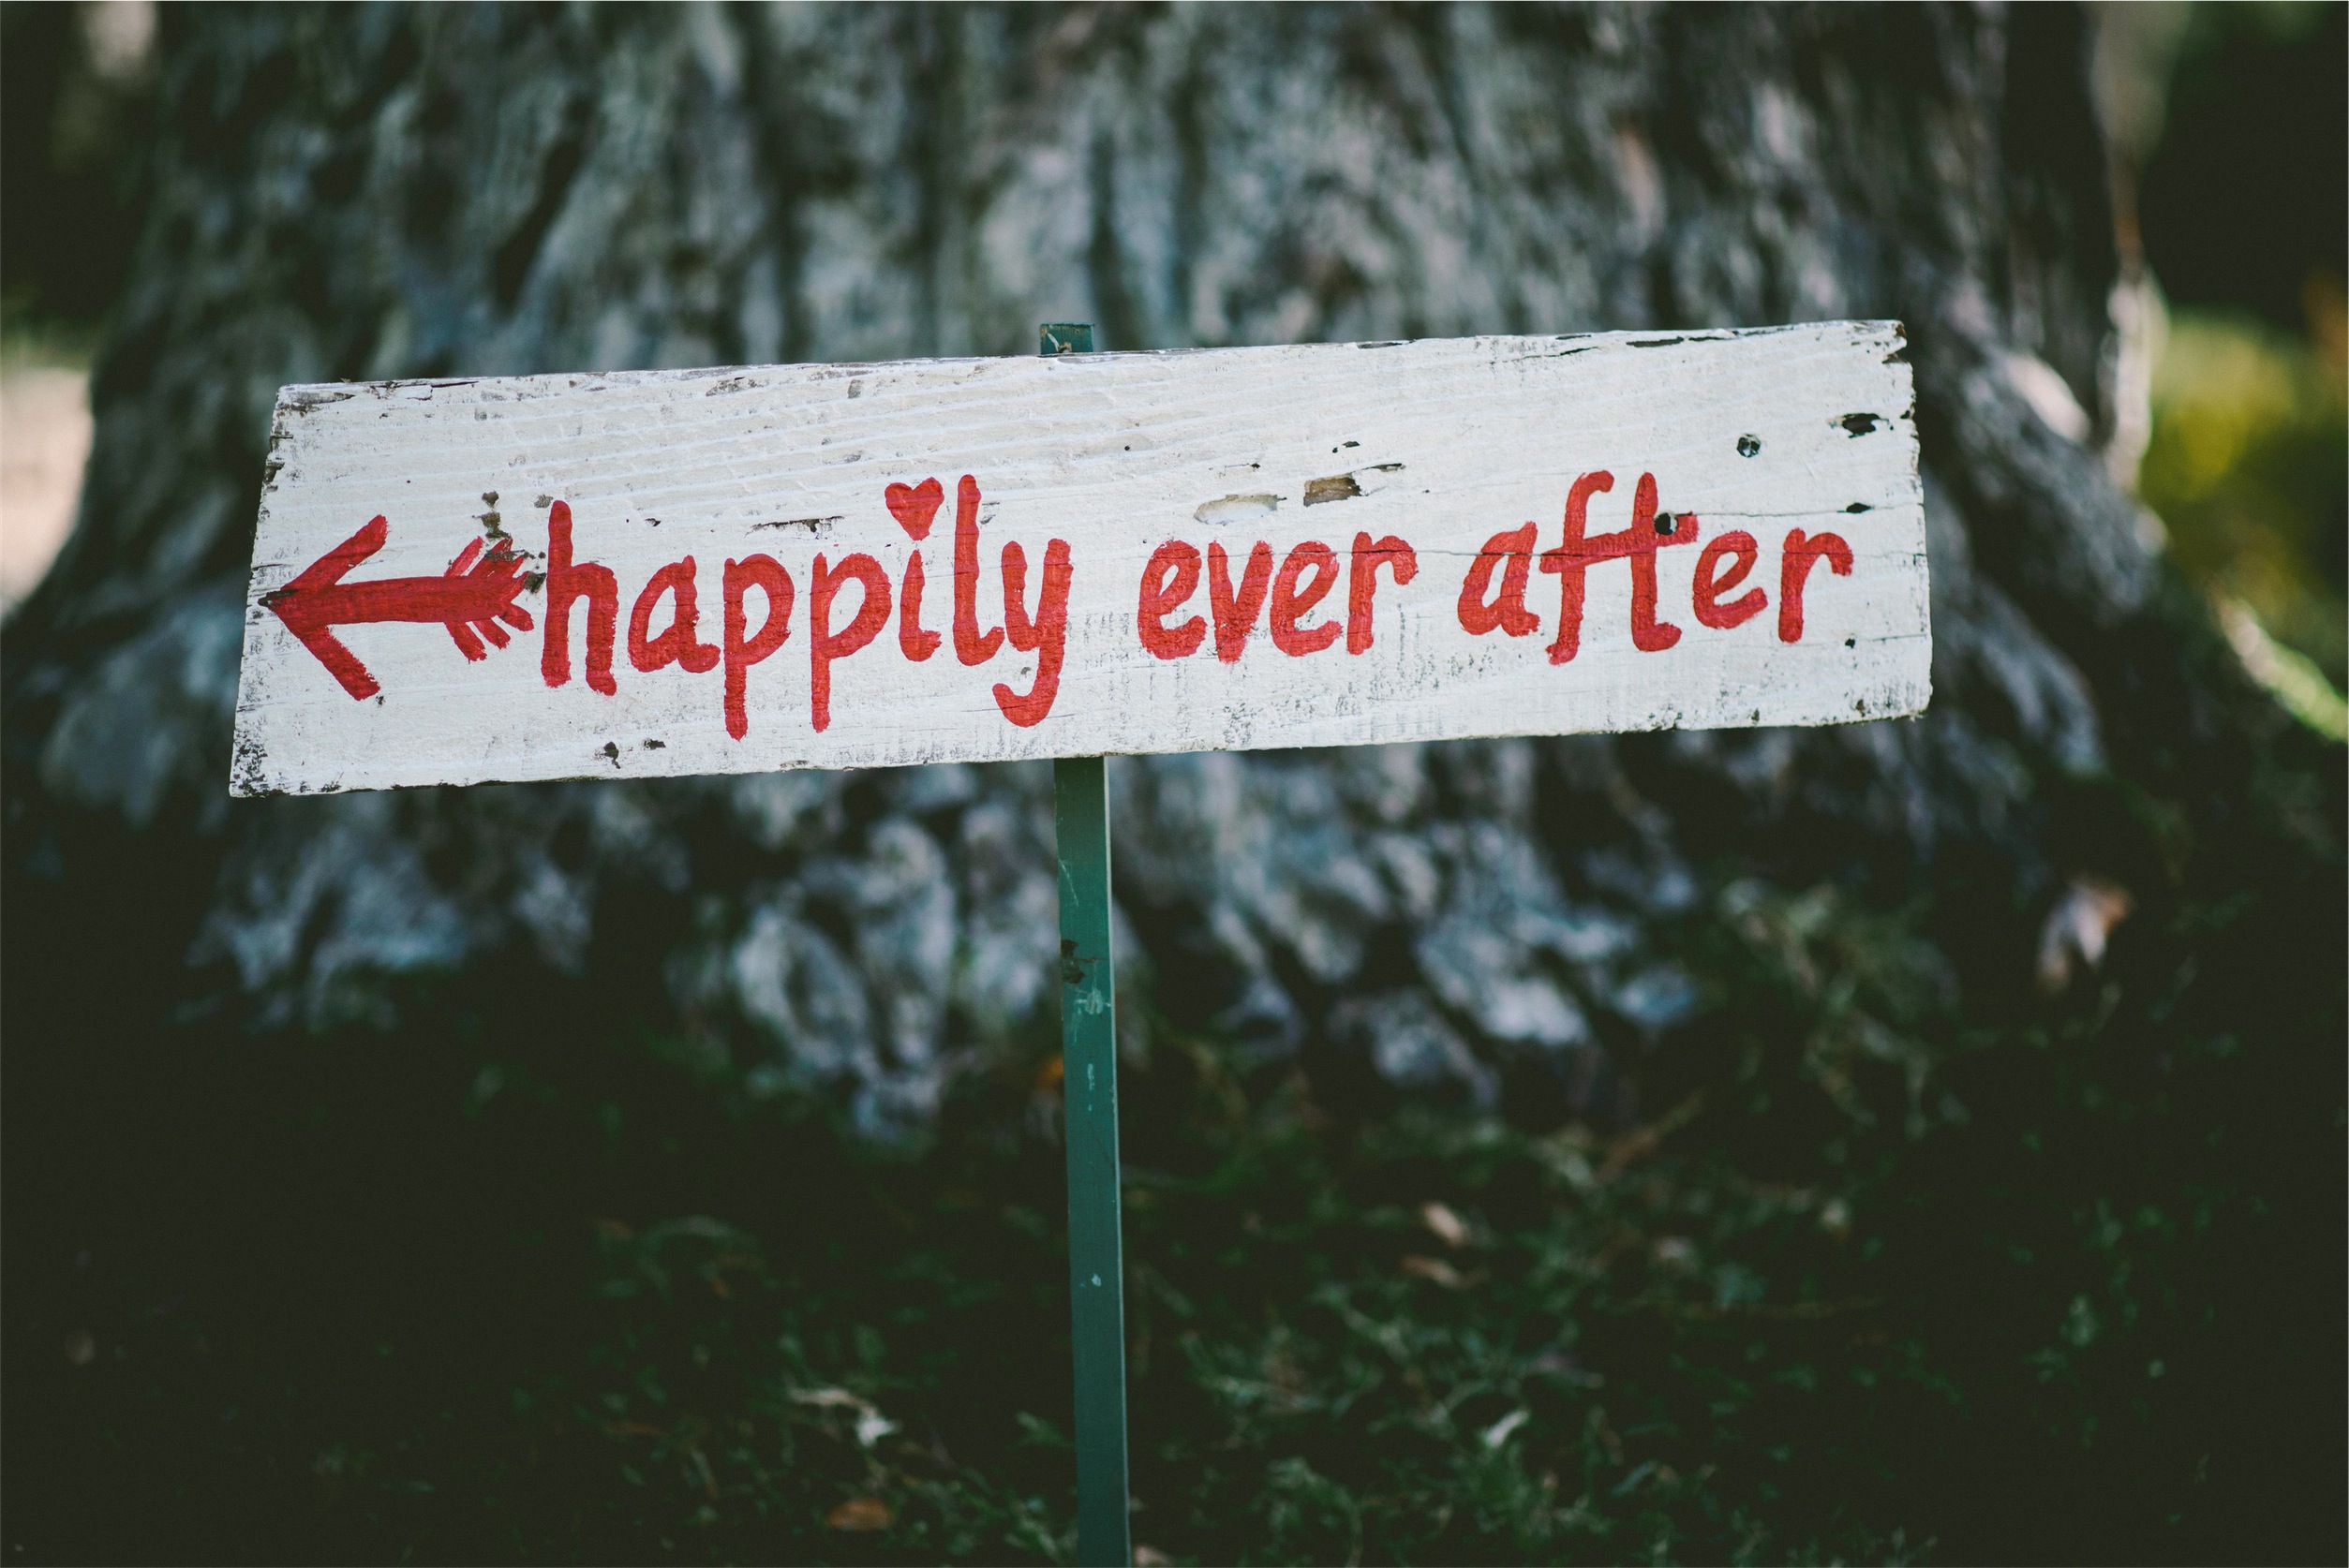 Happily ever after_Ben Rosett_Stocksnap